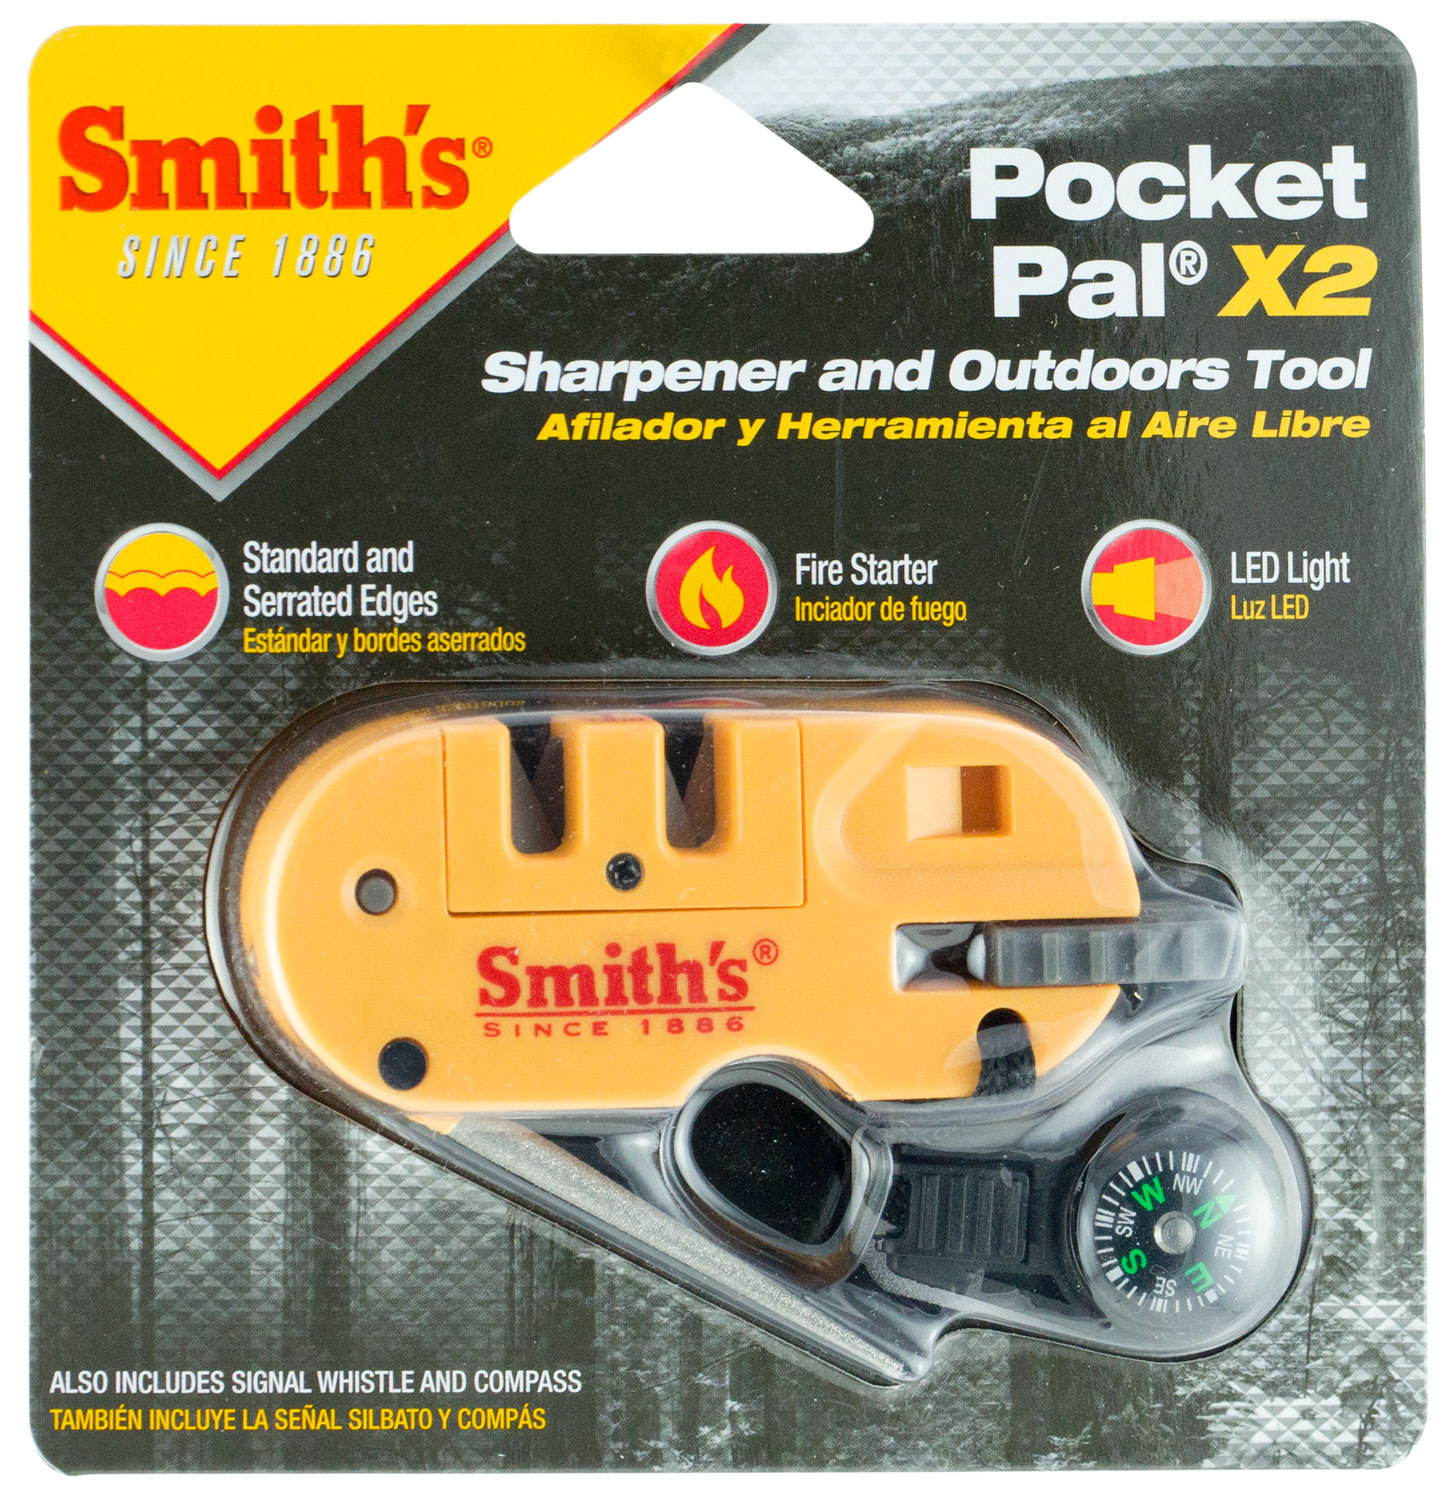 Smiths Products 50364 Pocket Pal X2 Sharpener and Outdoor Tool Hand Held Fine/Medium/Coarse Carbide, Ceramic, Diamond Sharpener Plastic Handle Yellow